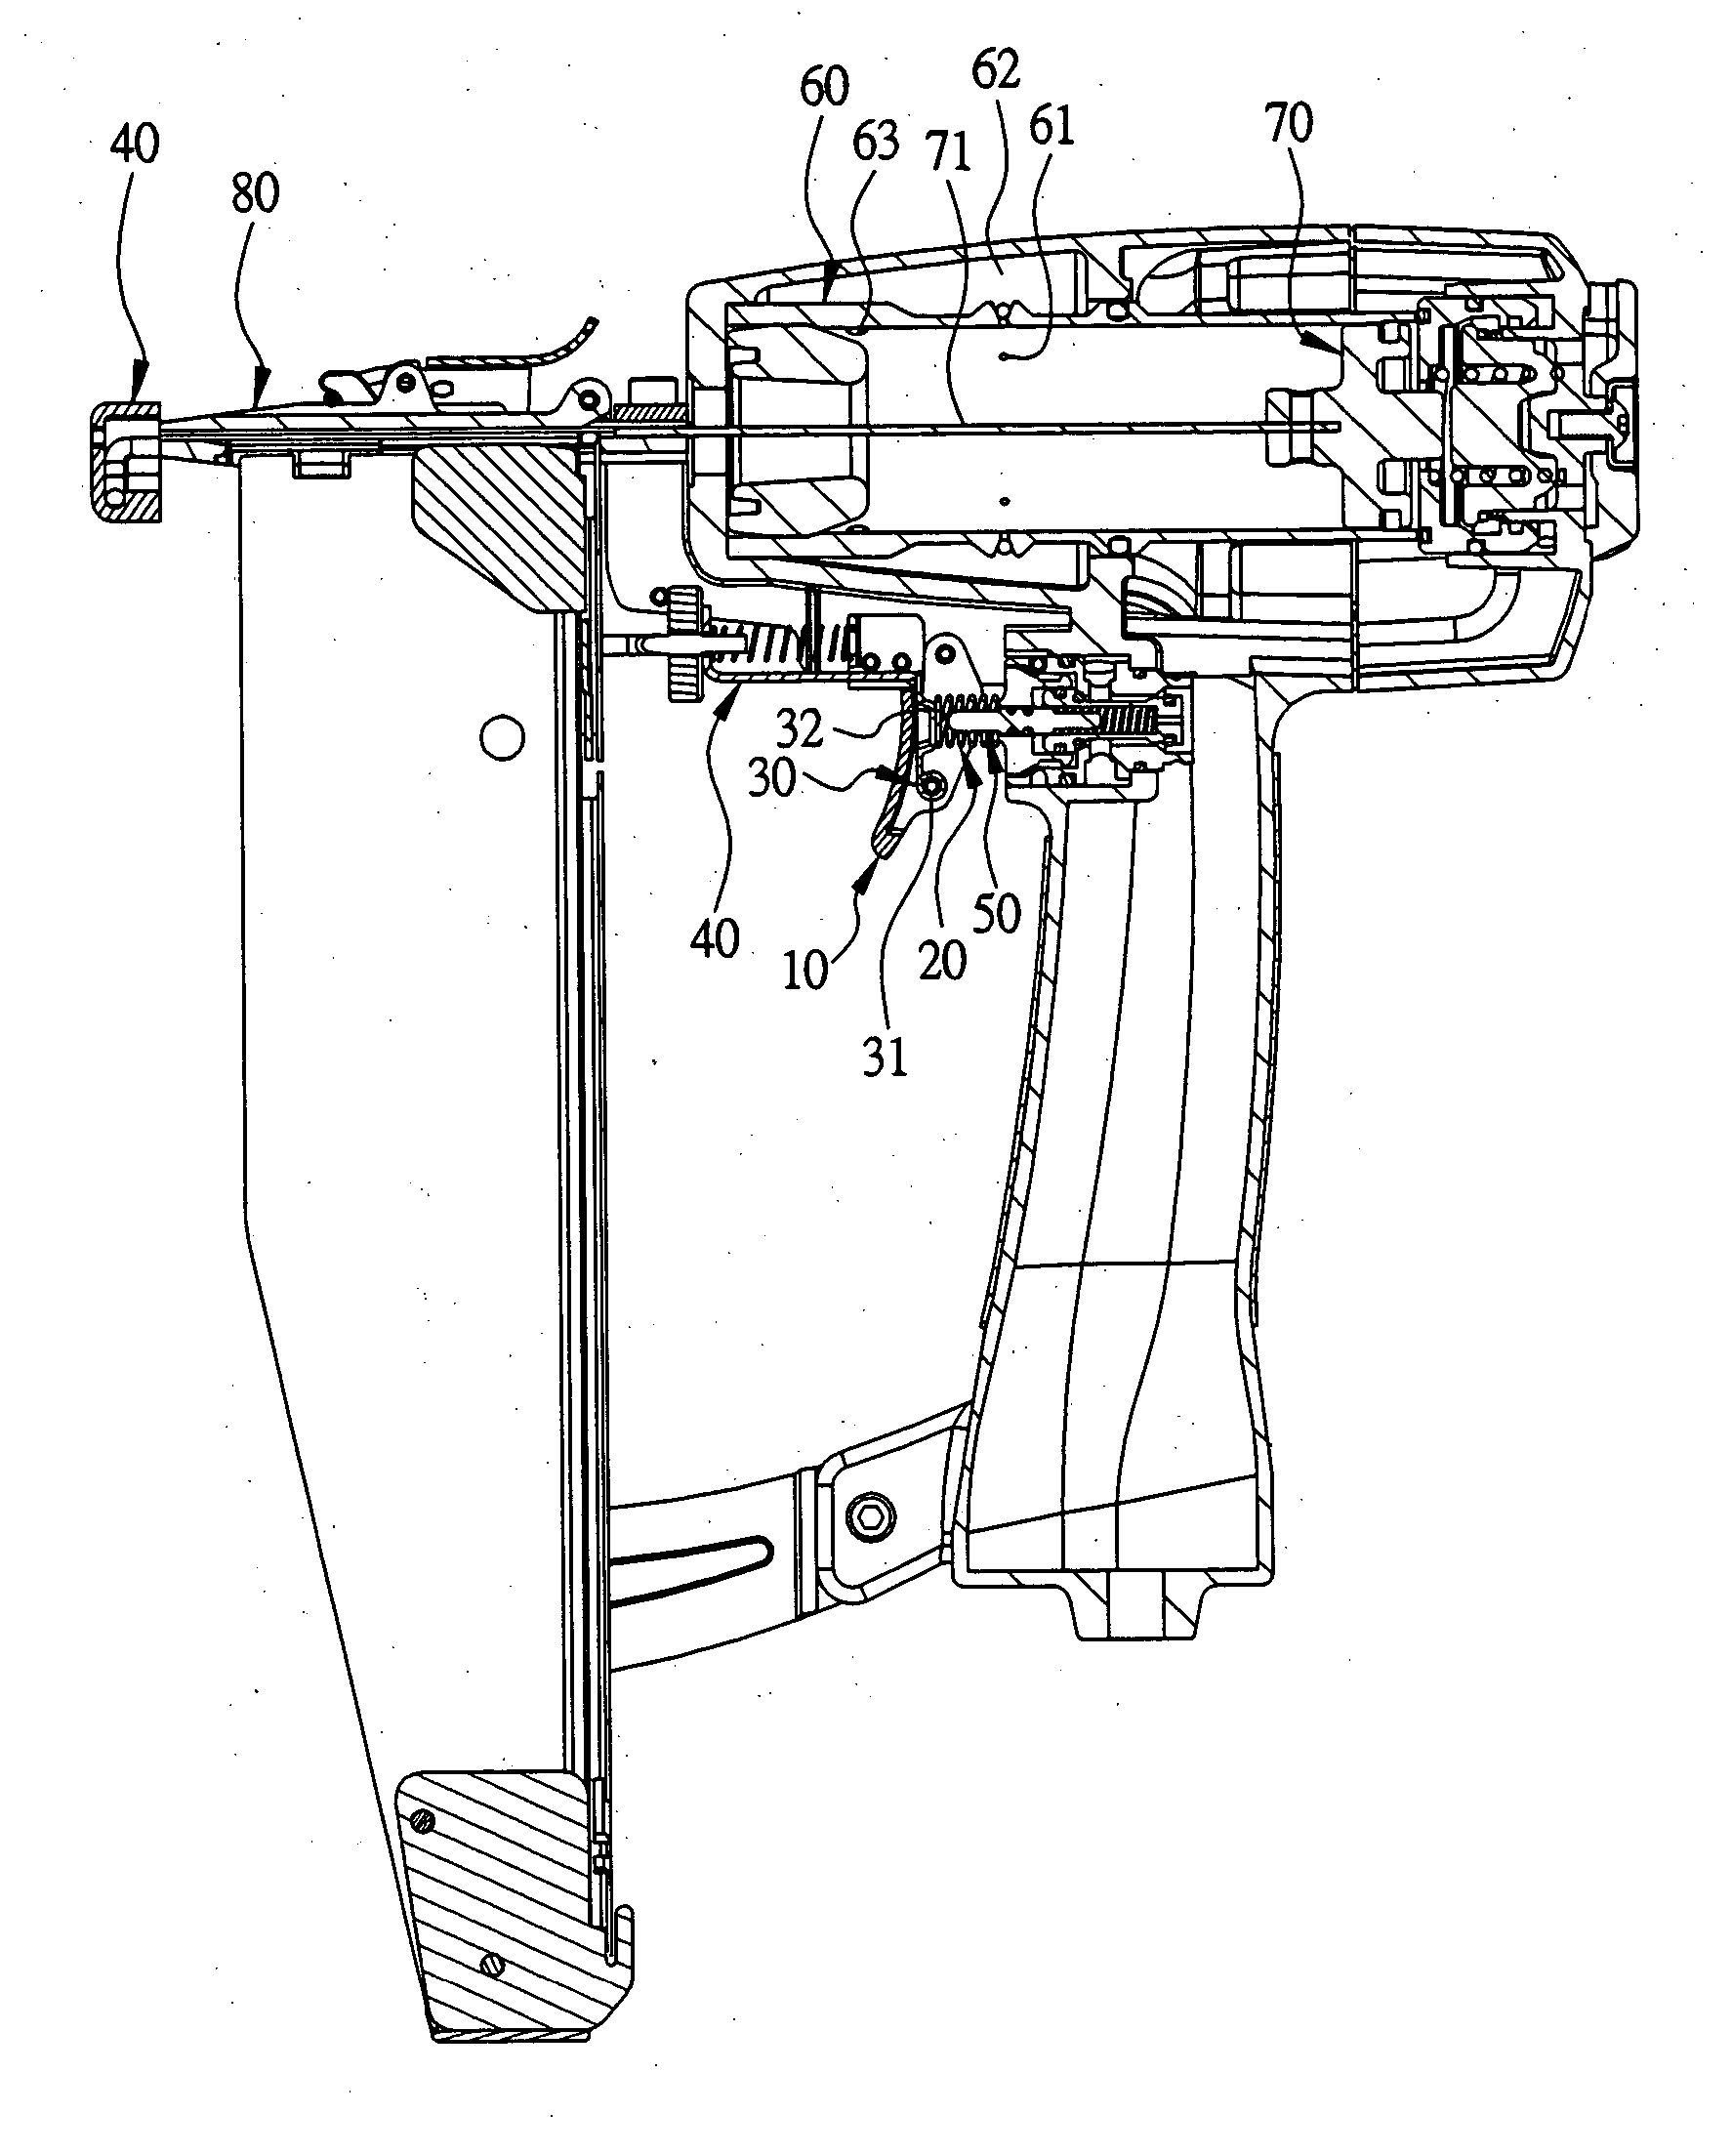 Single orderly striking device for a nail gun